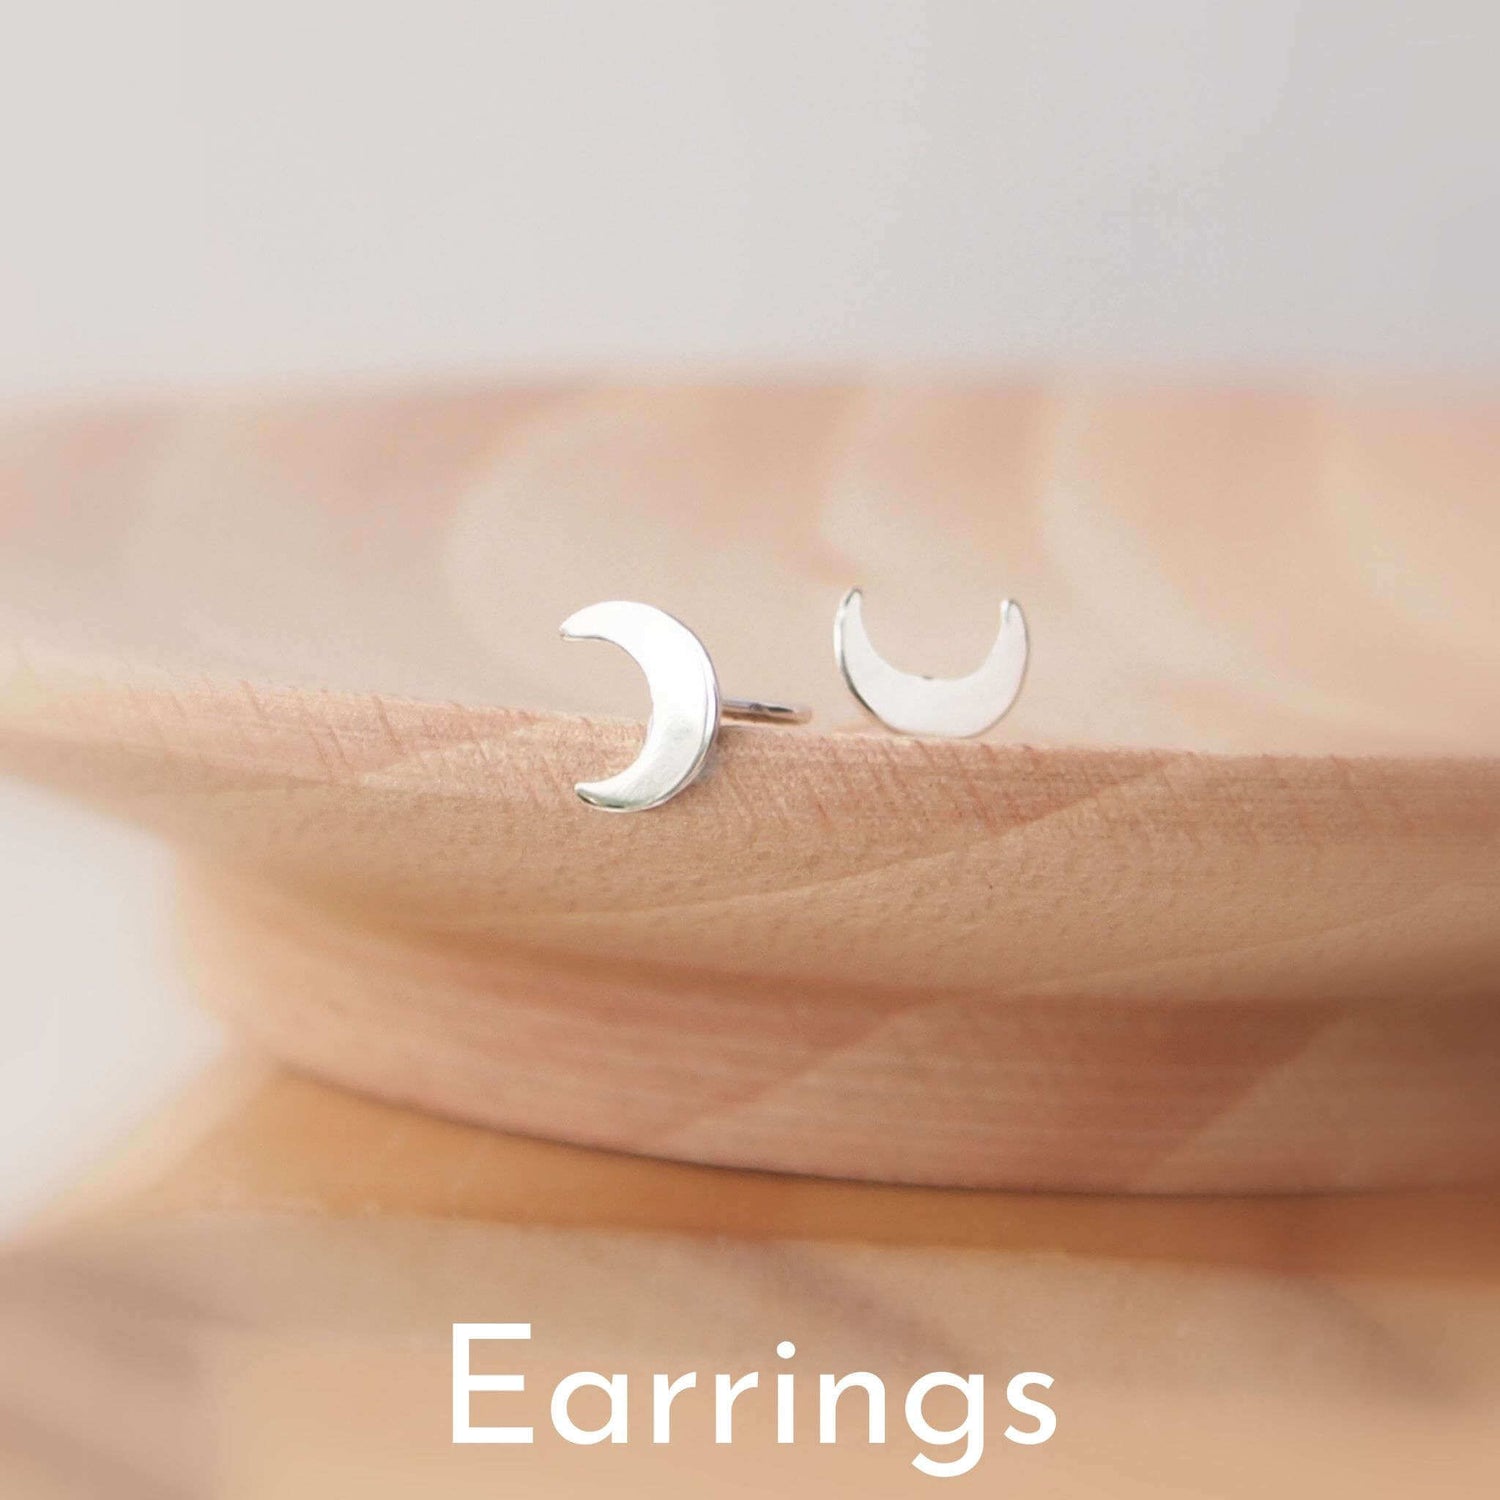 Small crescent moon stud earrings in Sterling Silver, handmade by maram jewellery in Scotland